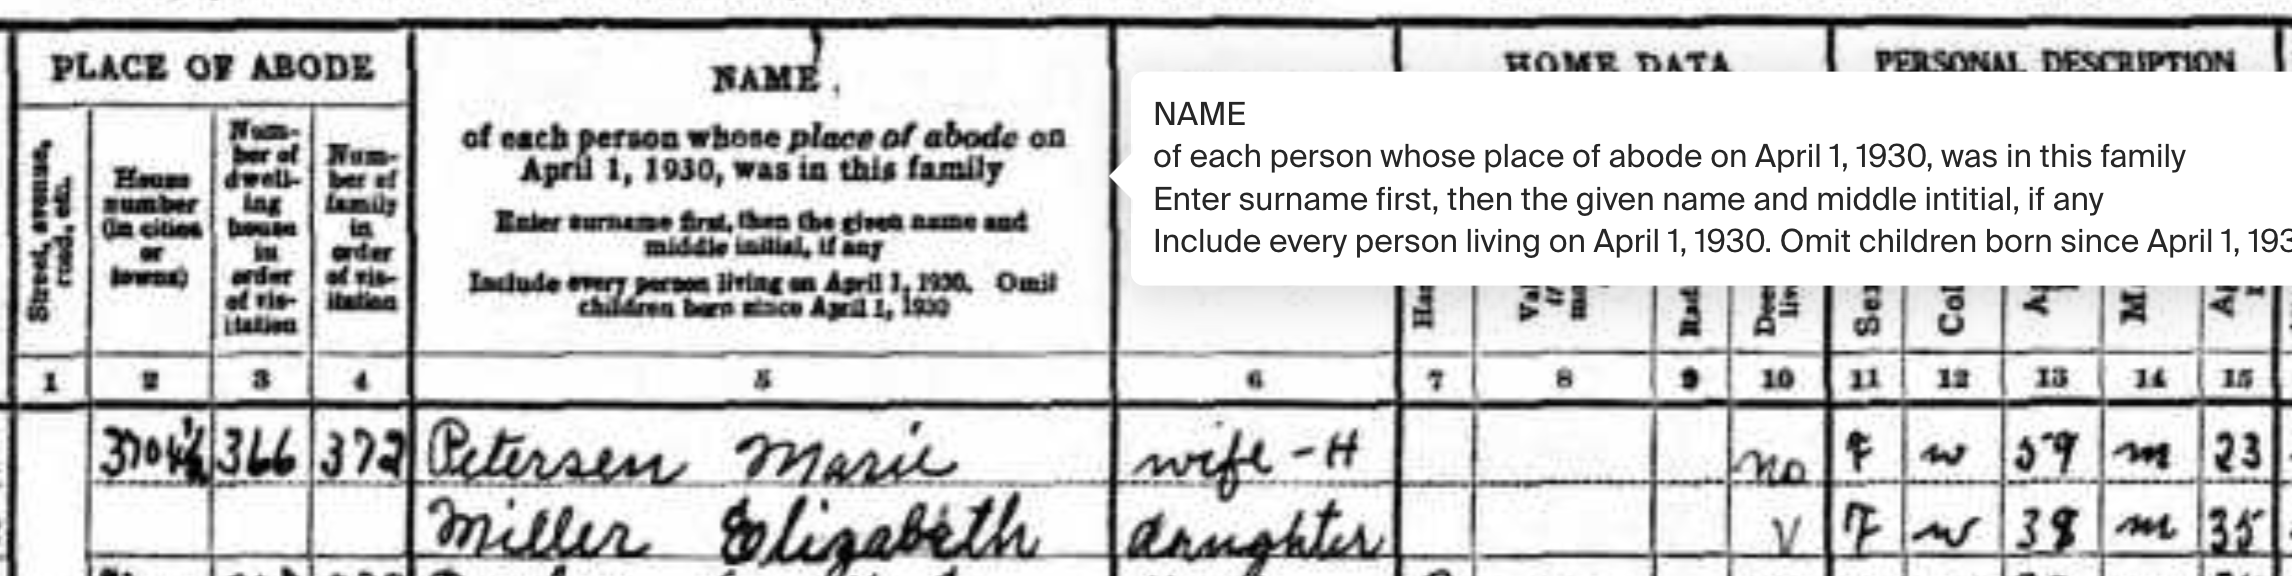 1930 U.S. federal census, Louis Petersen family, 1930